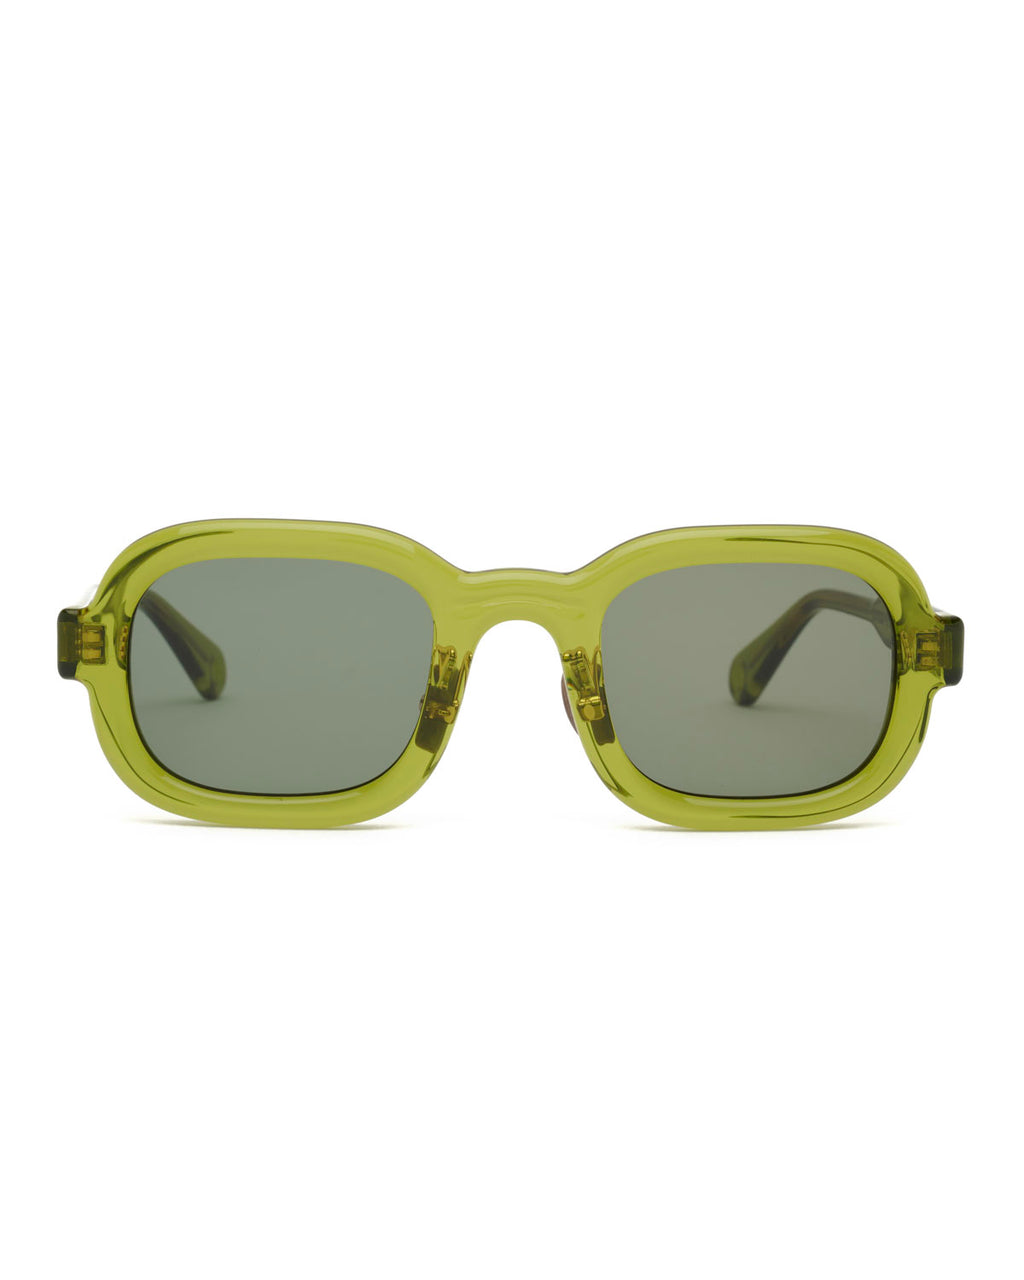 Newman Post Modern Primitive Eye Protection - Green 1